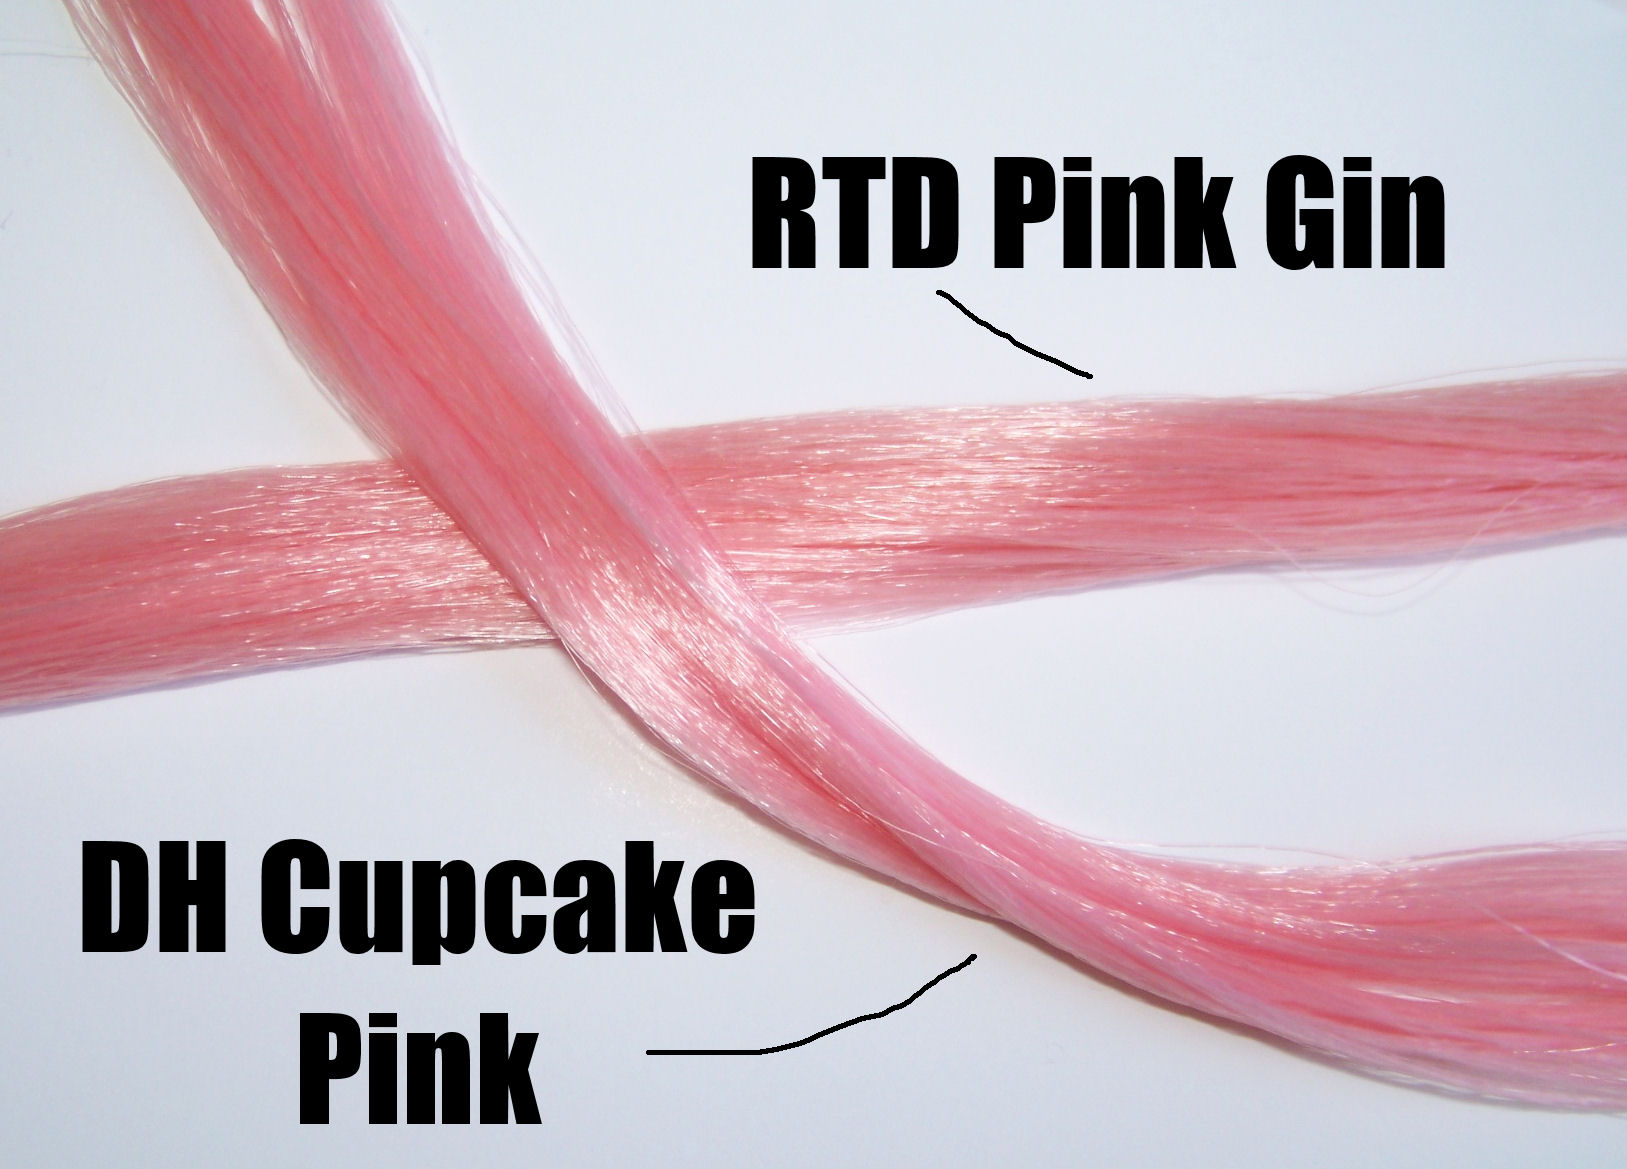  photo cupcake vs pink gin.jpg